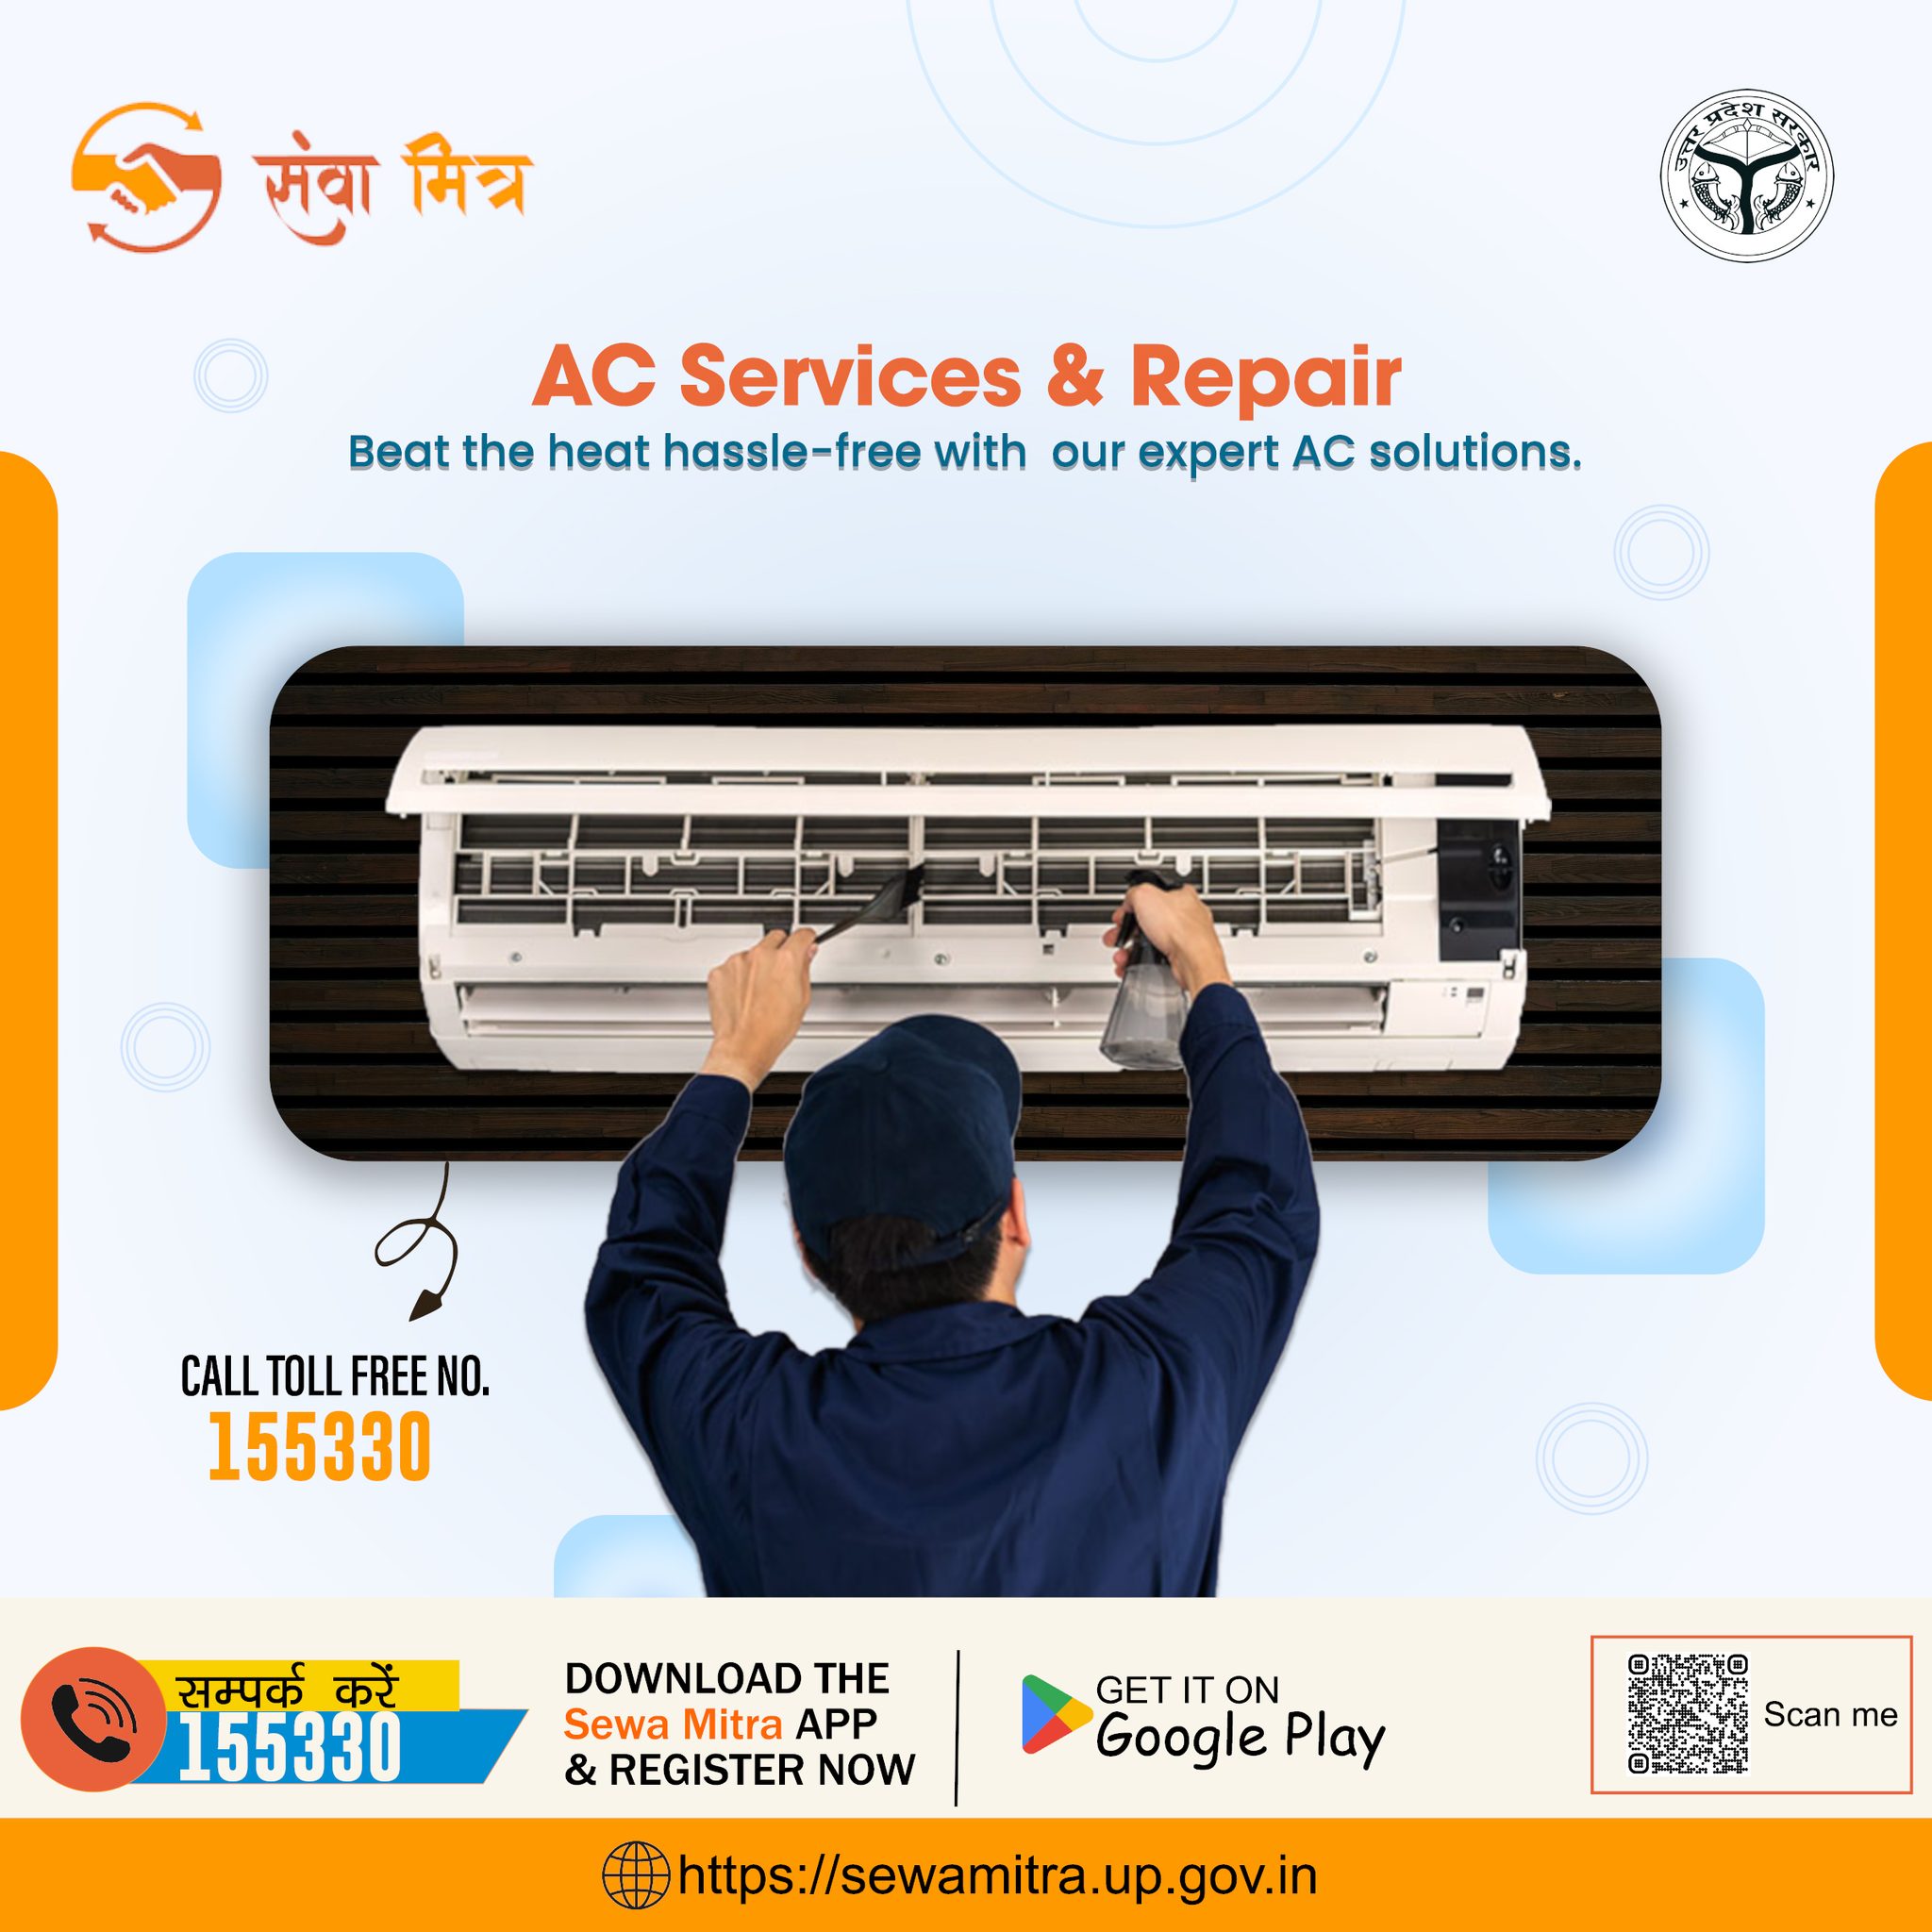 Ac Repair Services in Noida - Sewa Mitra